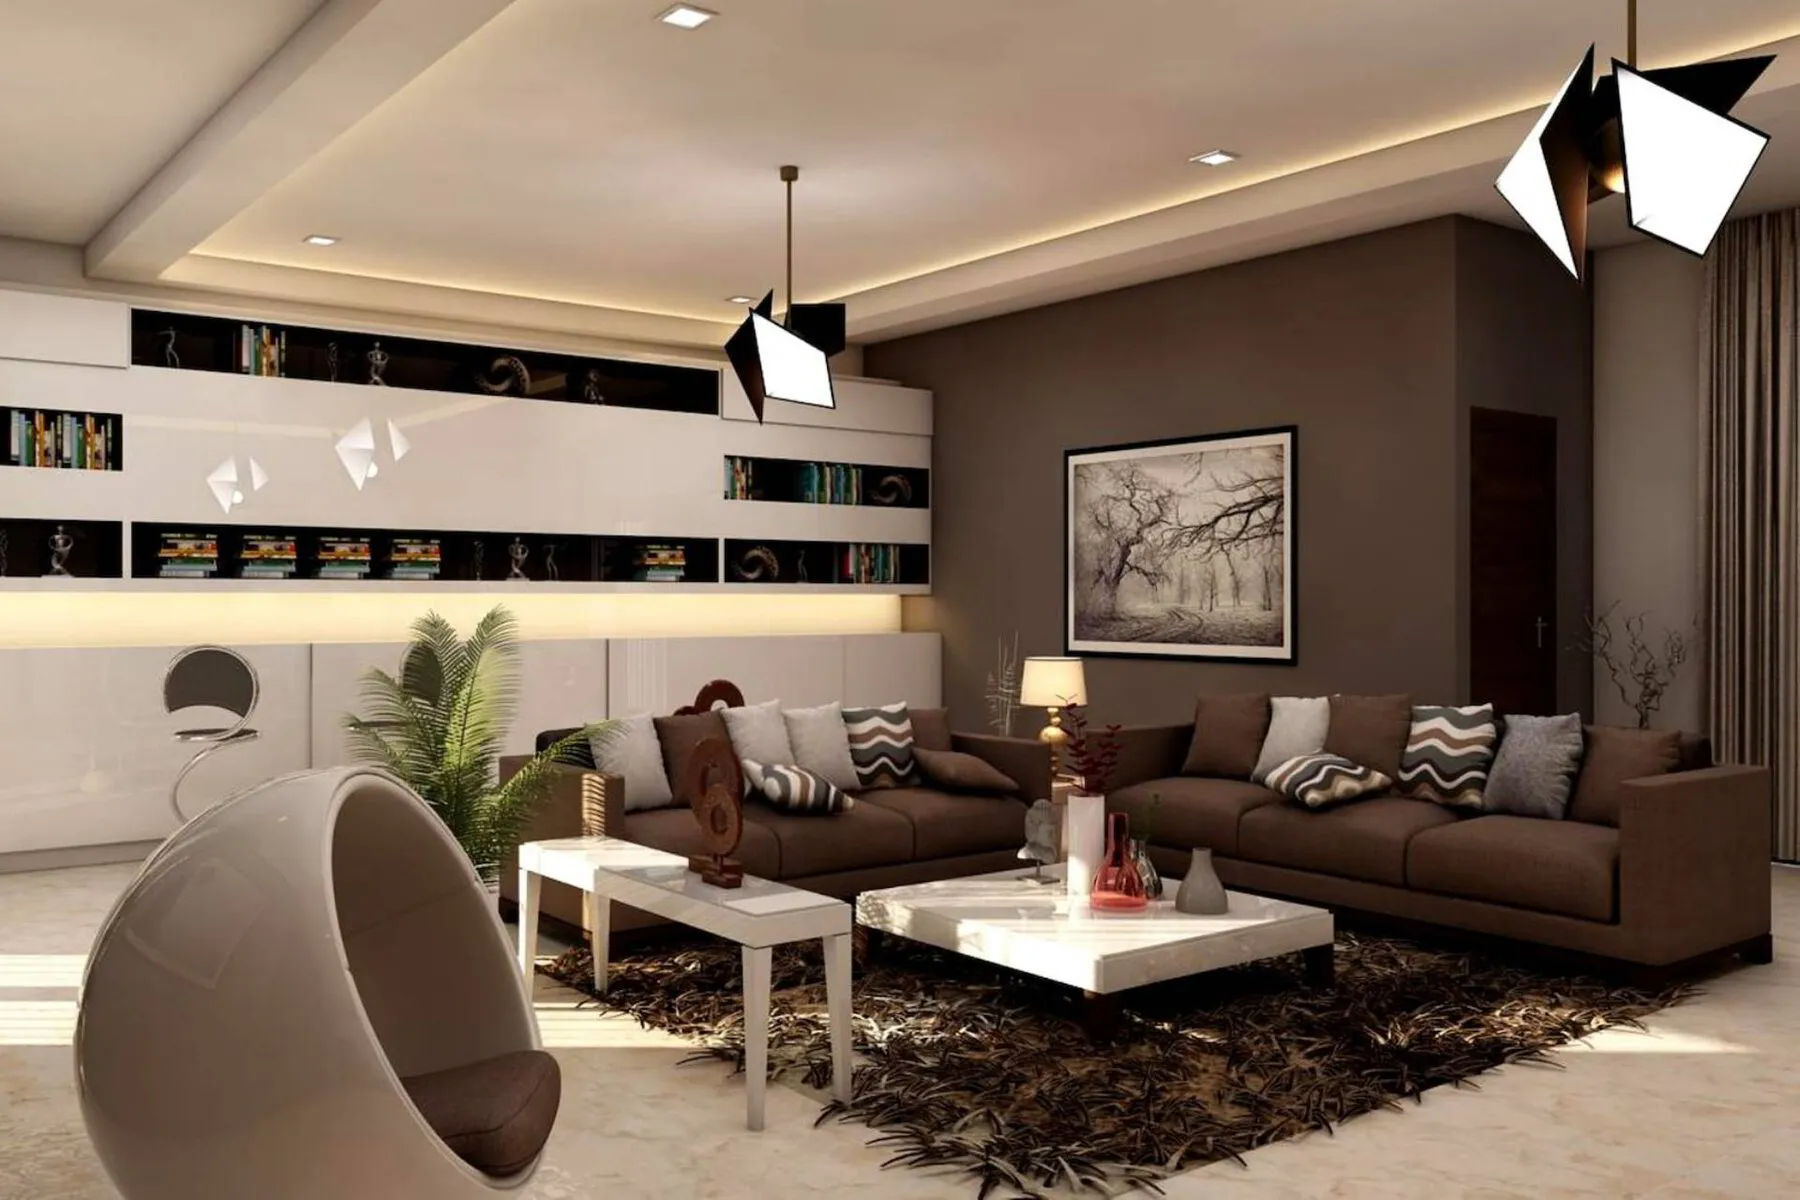 Modern living room using light as a design element